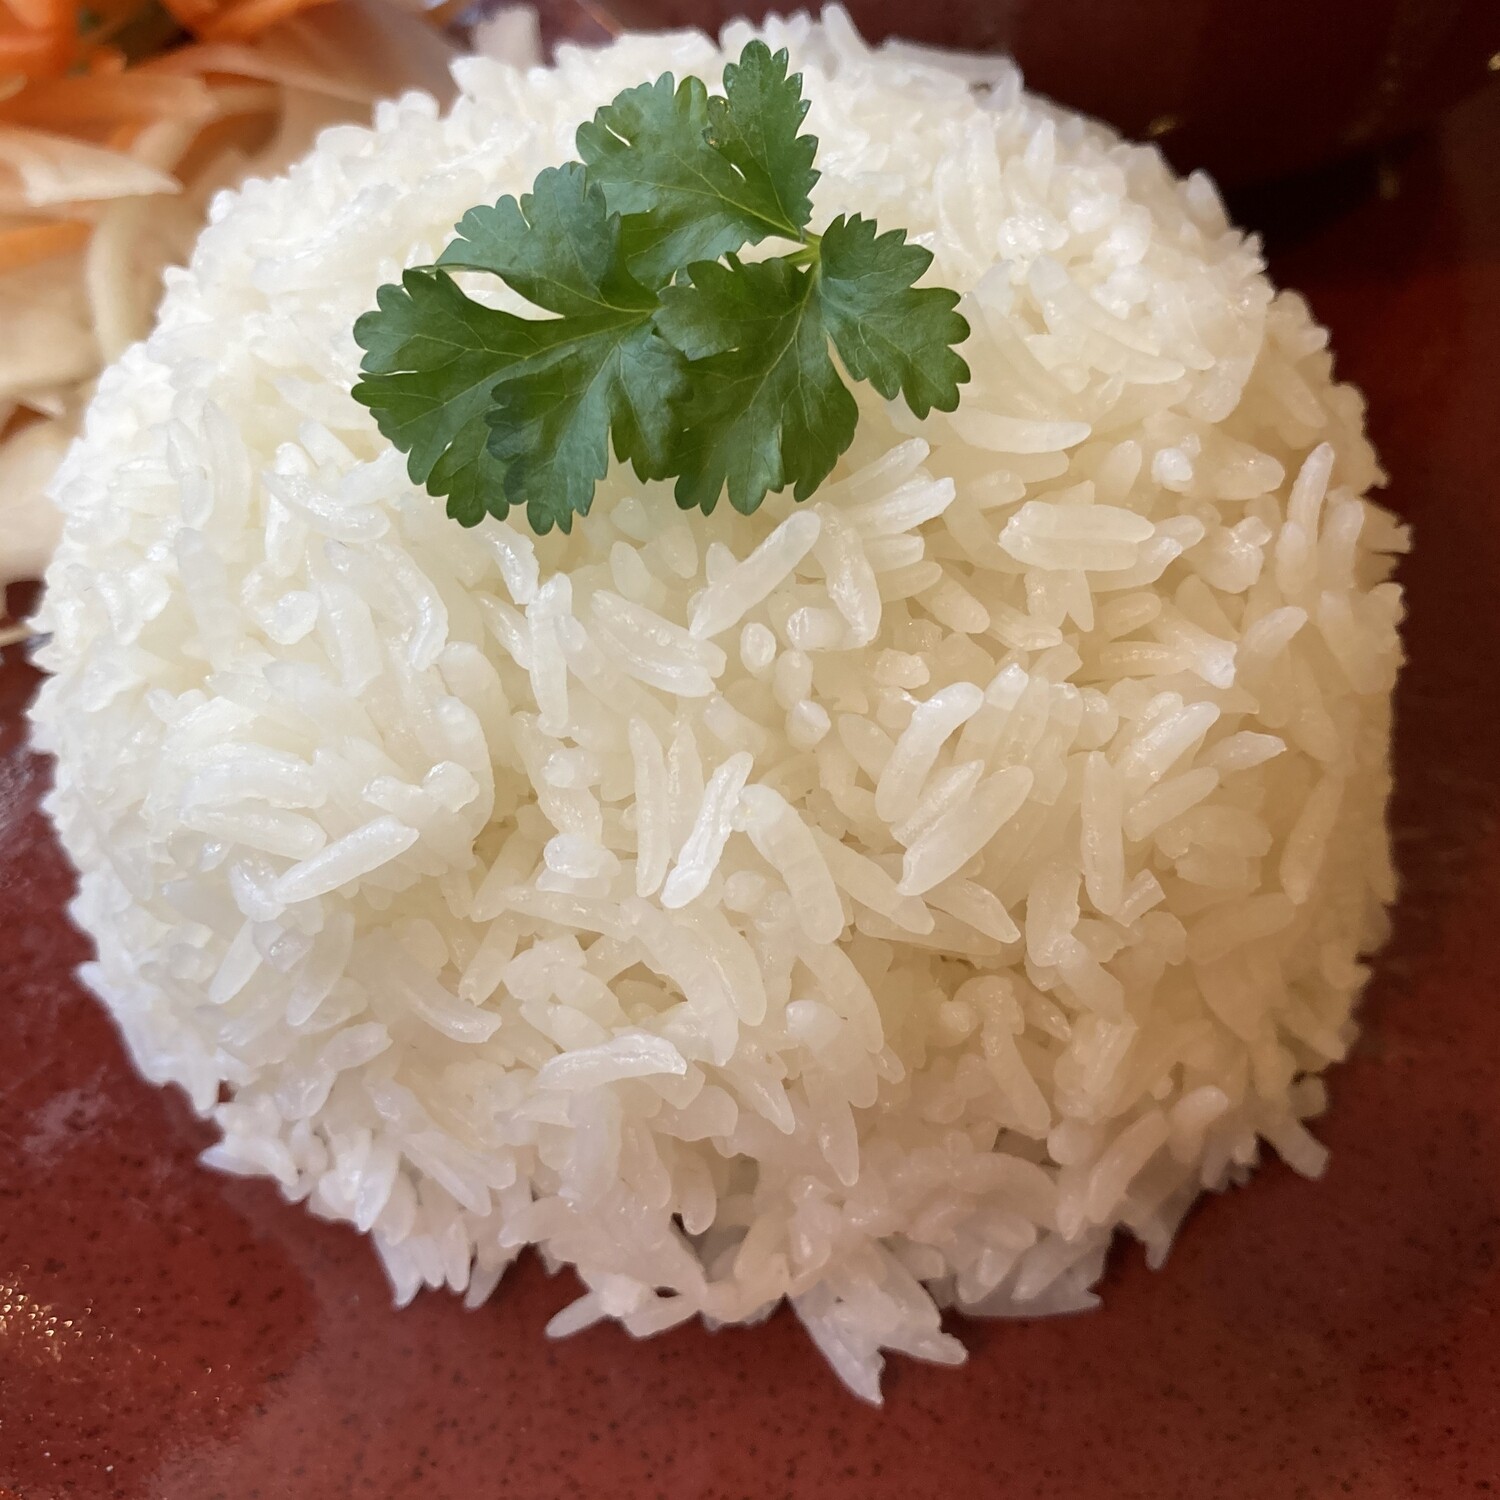 Boiled jasmine rice